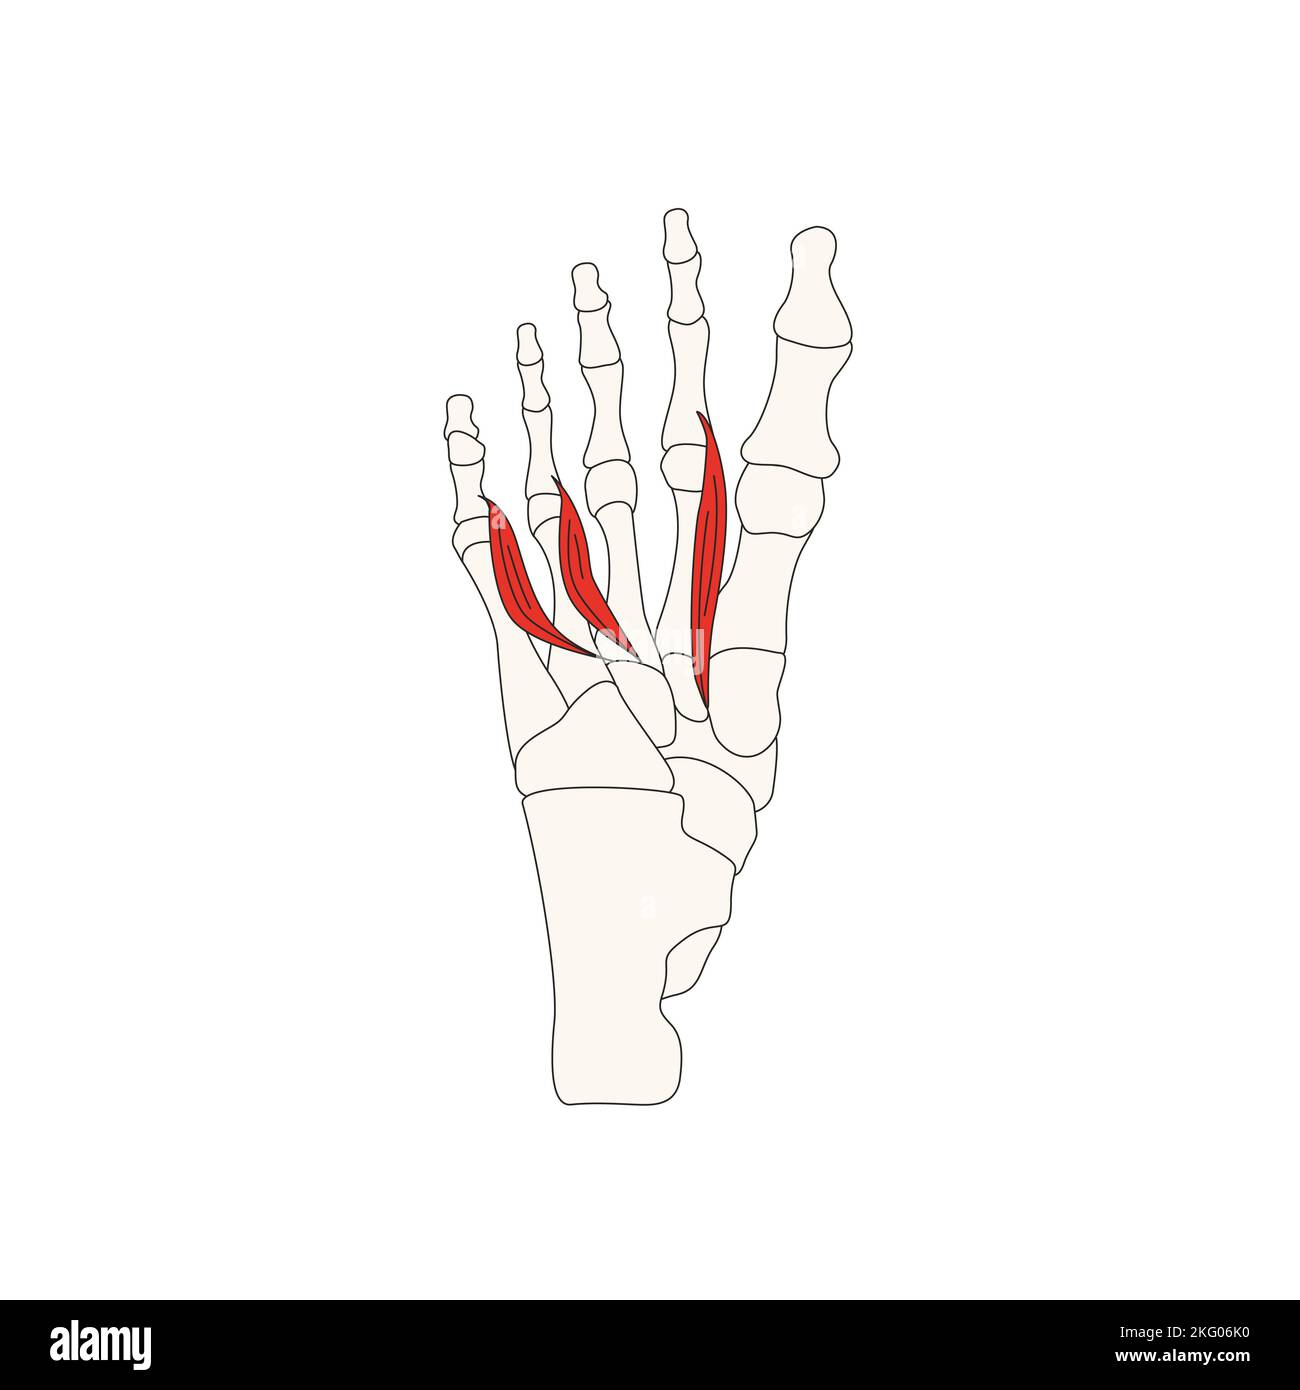 lumbricals and interossei of hand